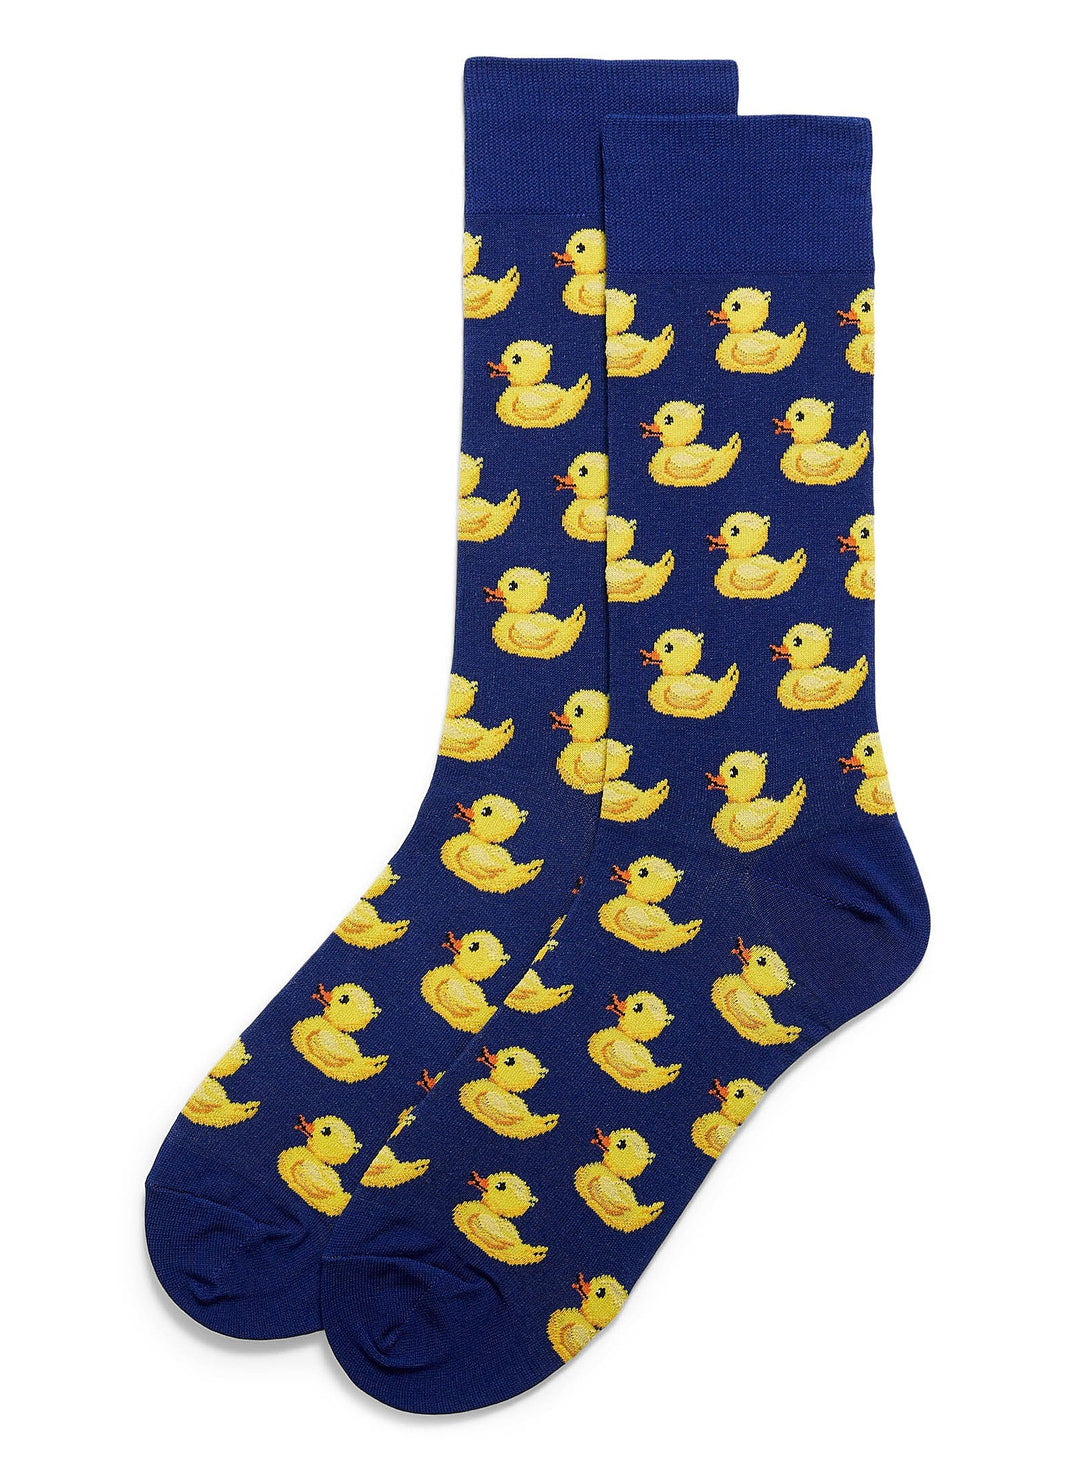 "Rubber Ducks" Cotton Crew Socks by Hot Sox - Medium